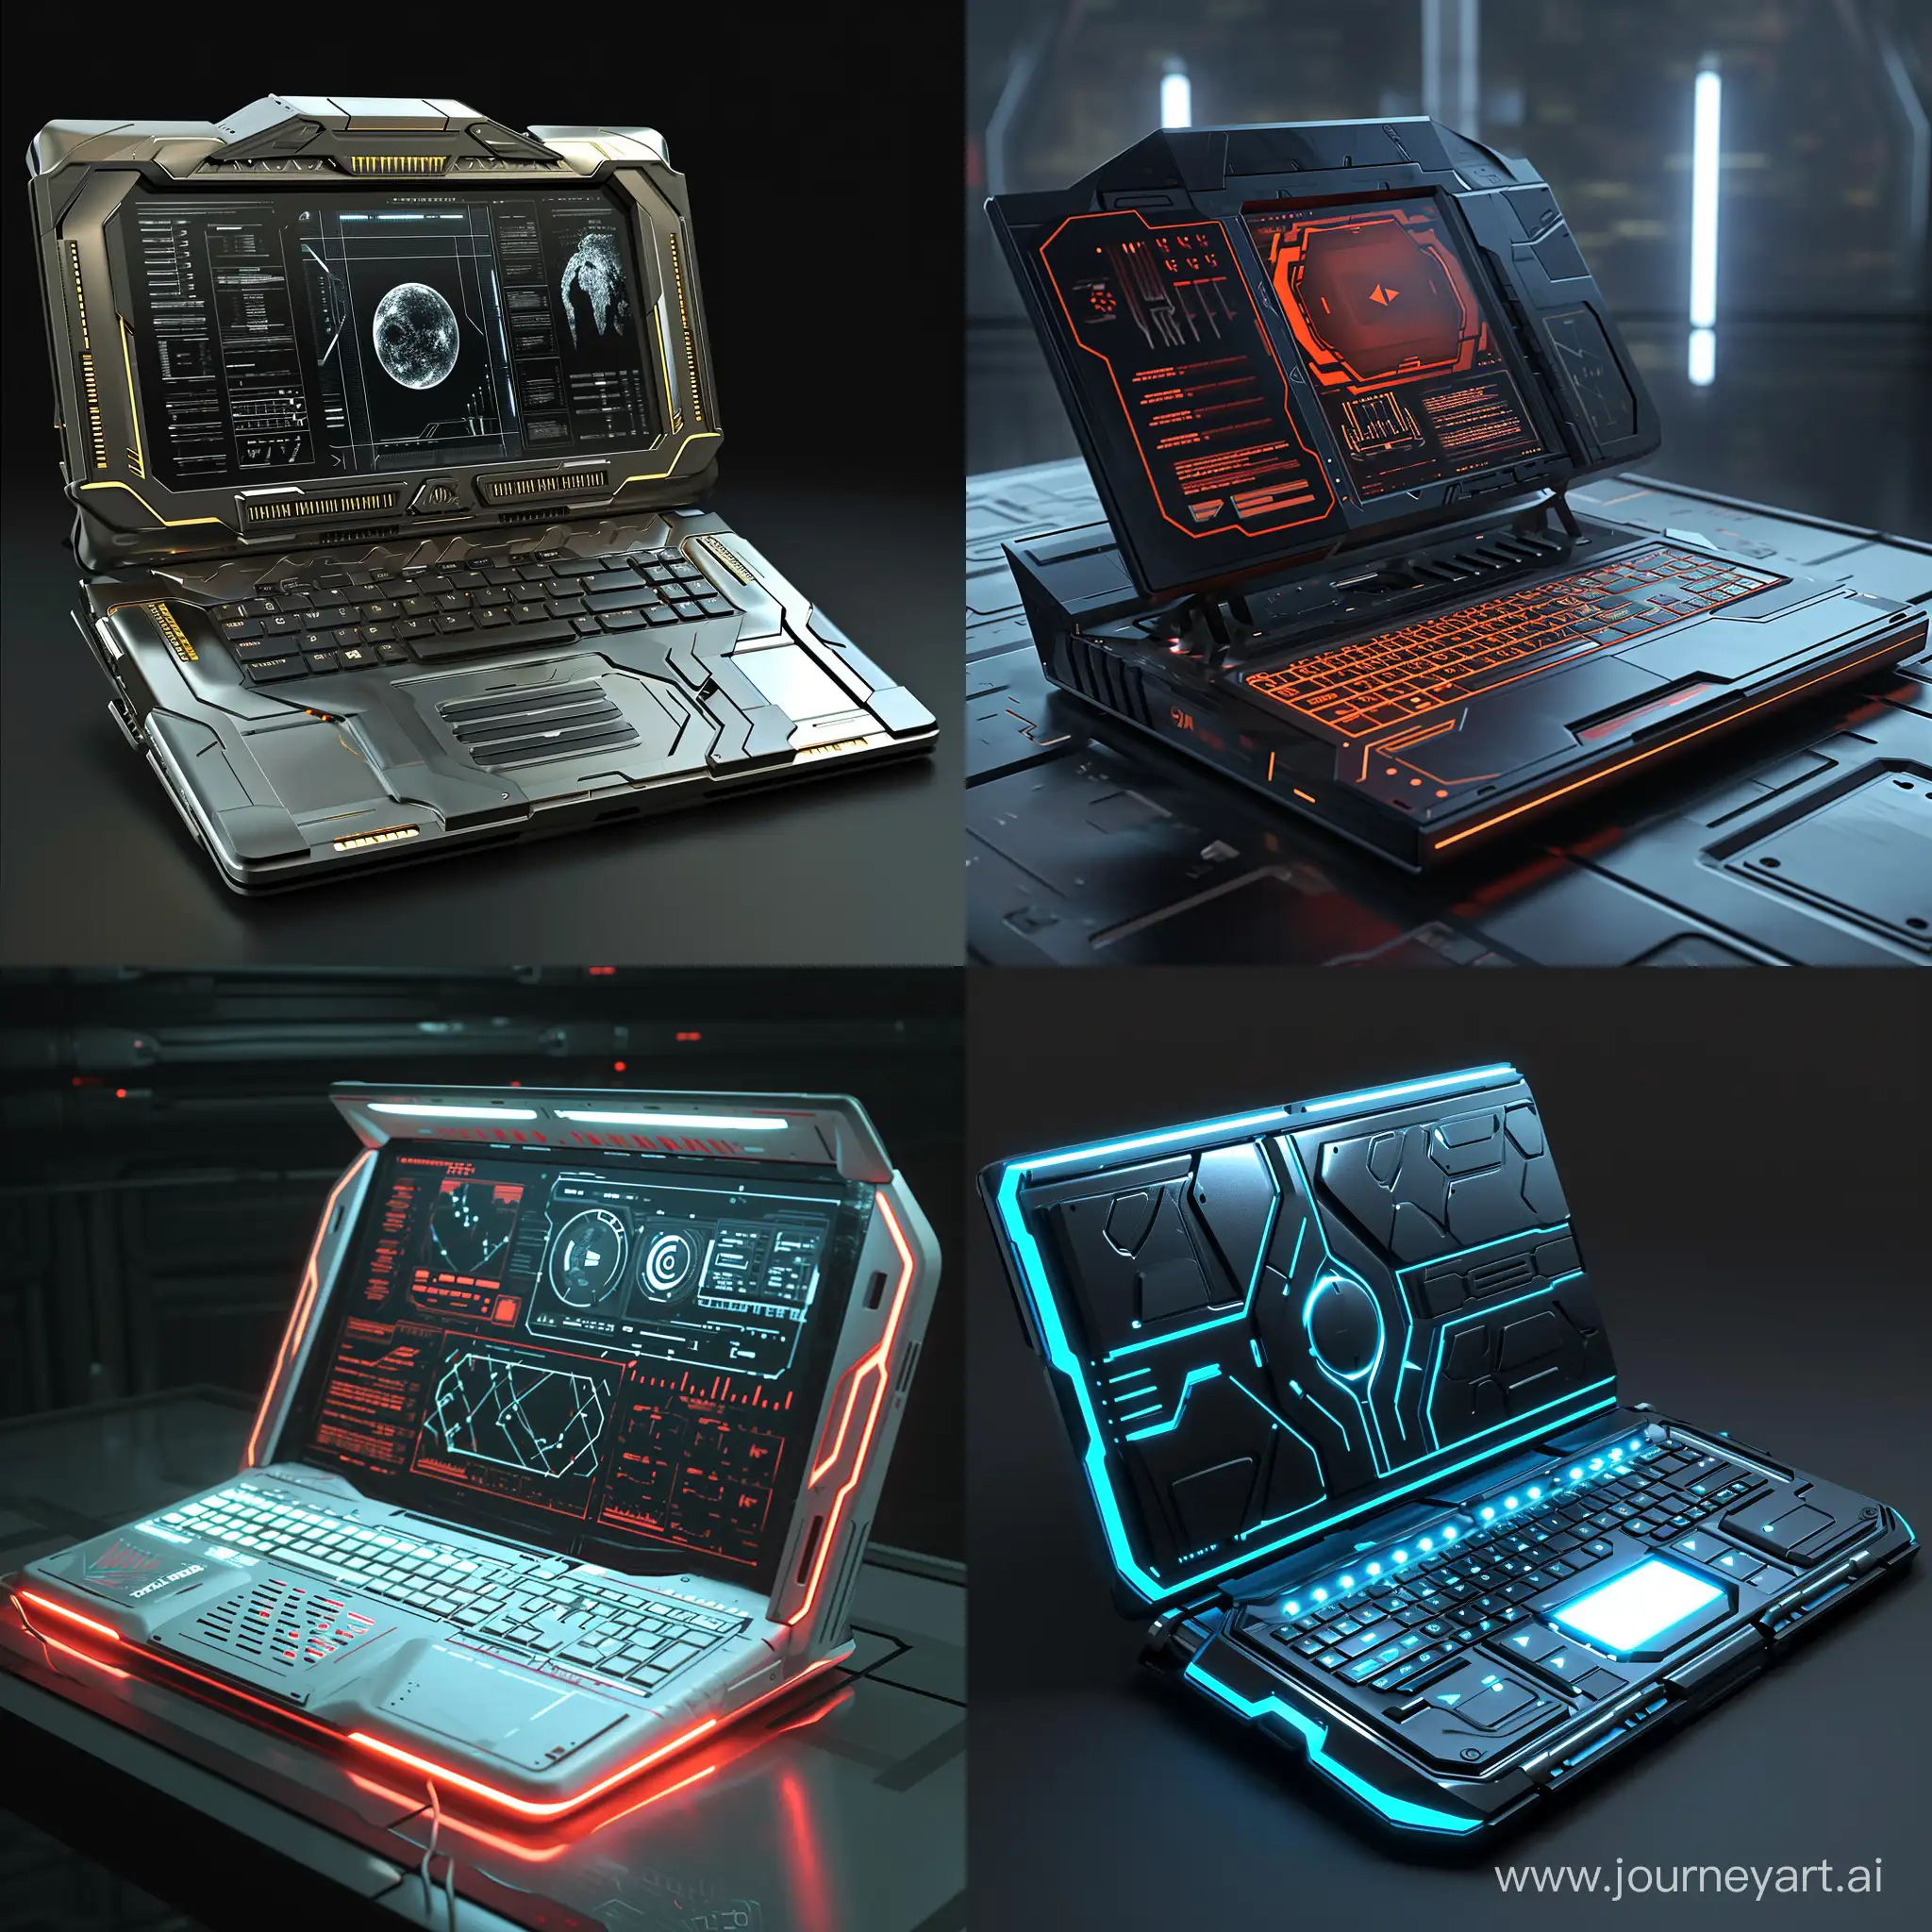 Futuristic-Armored-Laptop-on-ArtStation-and-DeviantArt